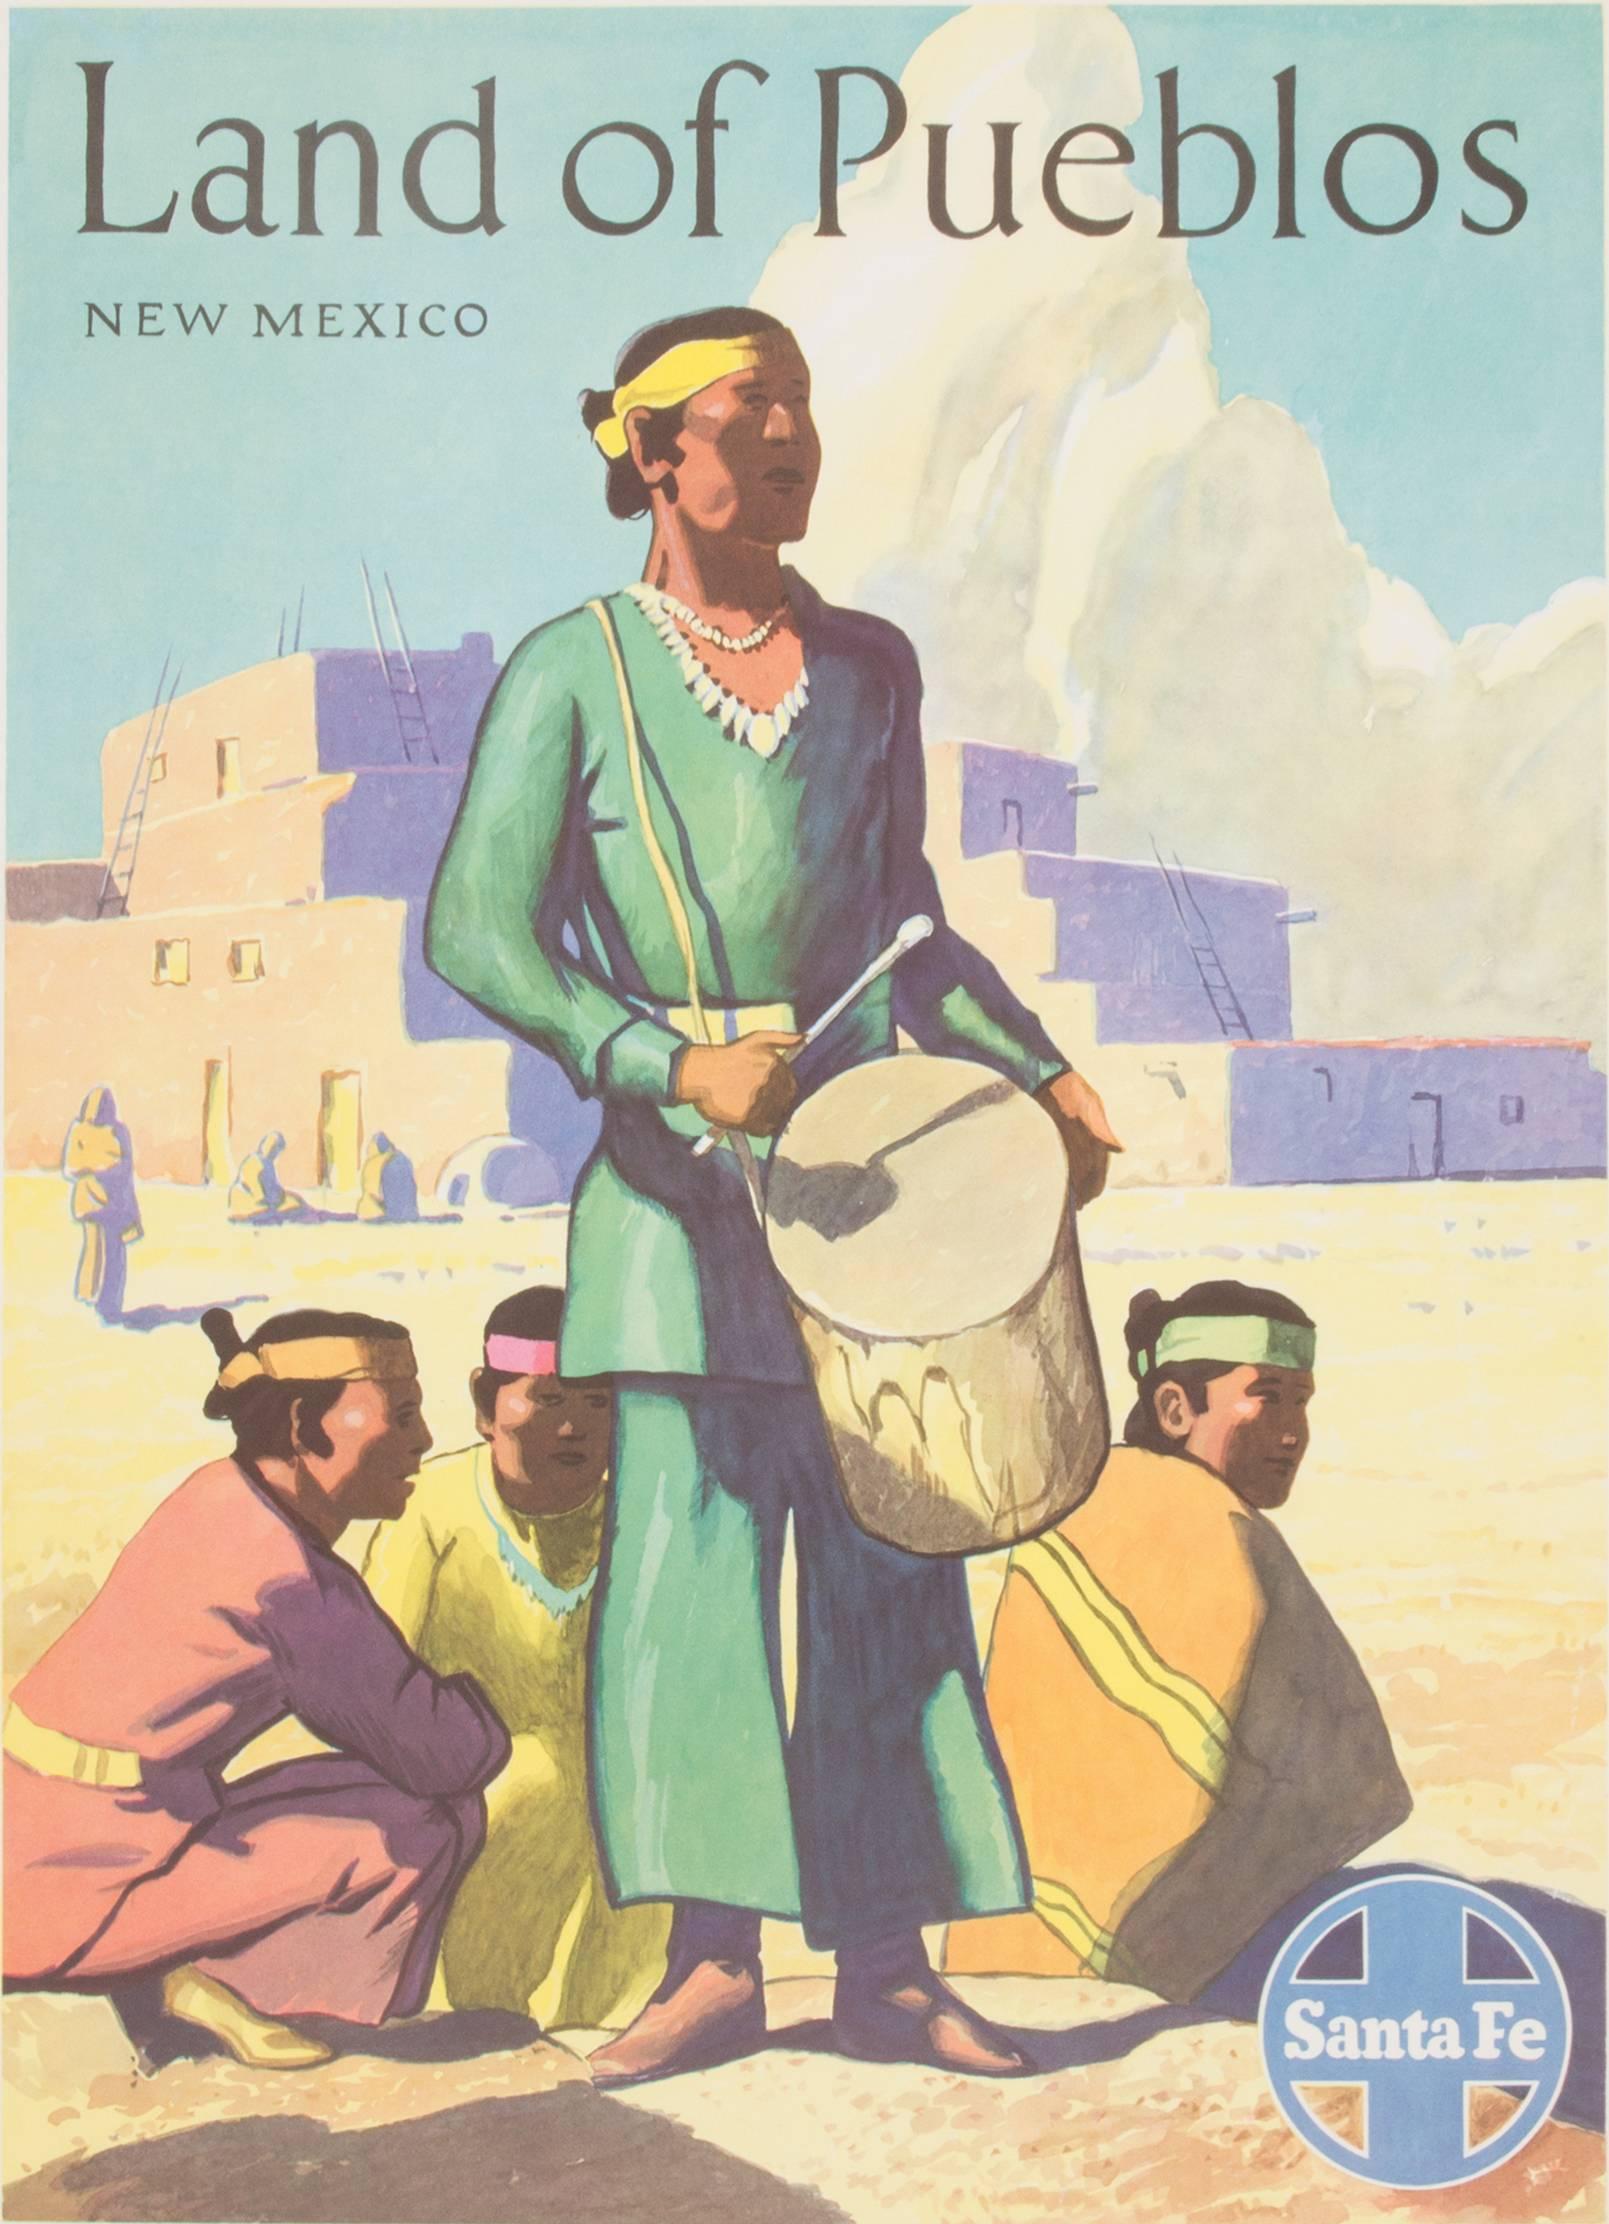 Vintage, Original Sante Fe Travel Poster 